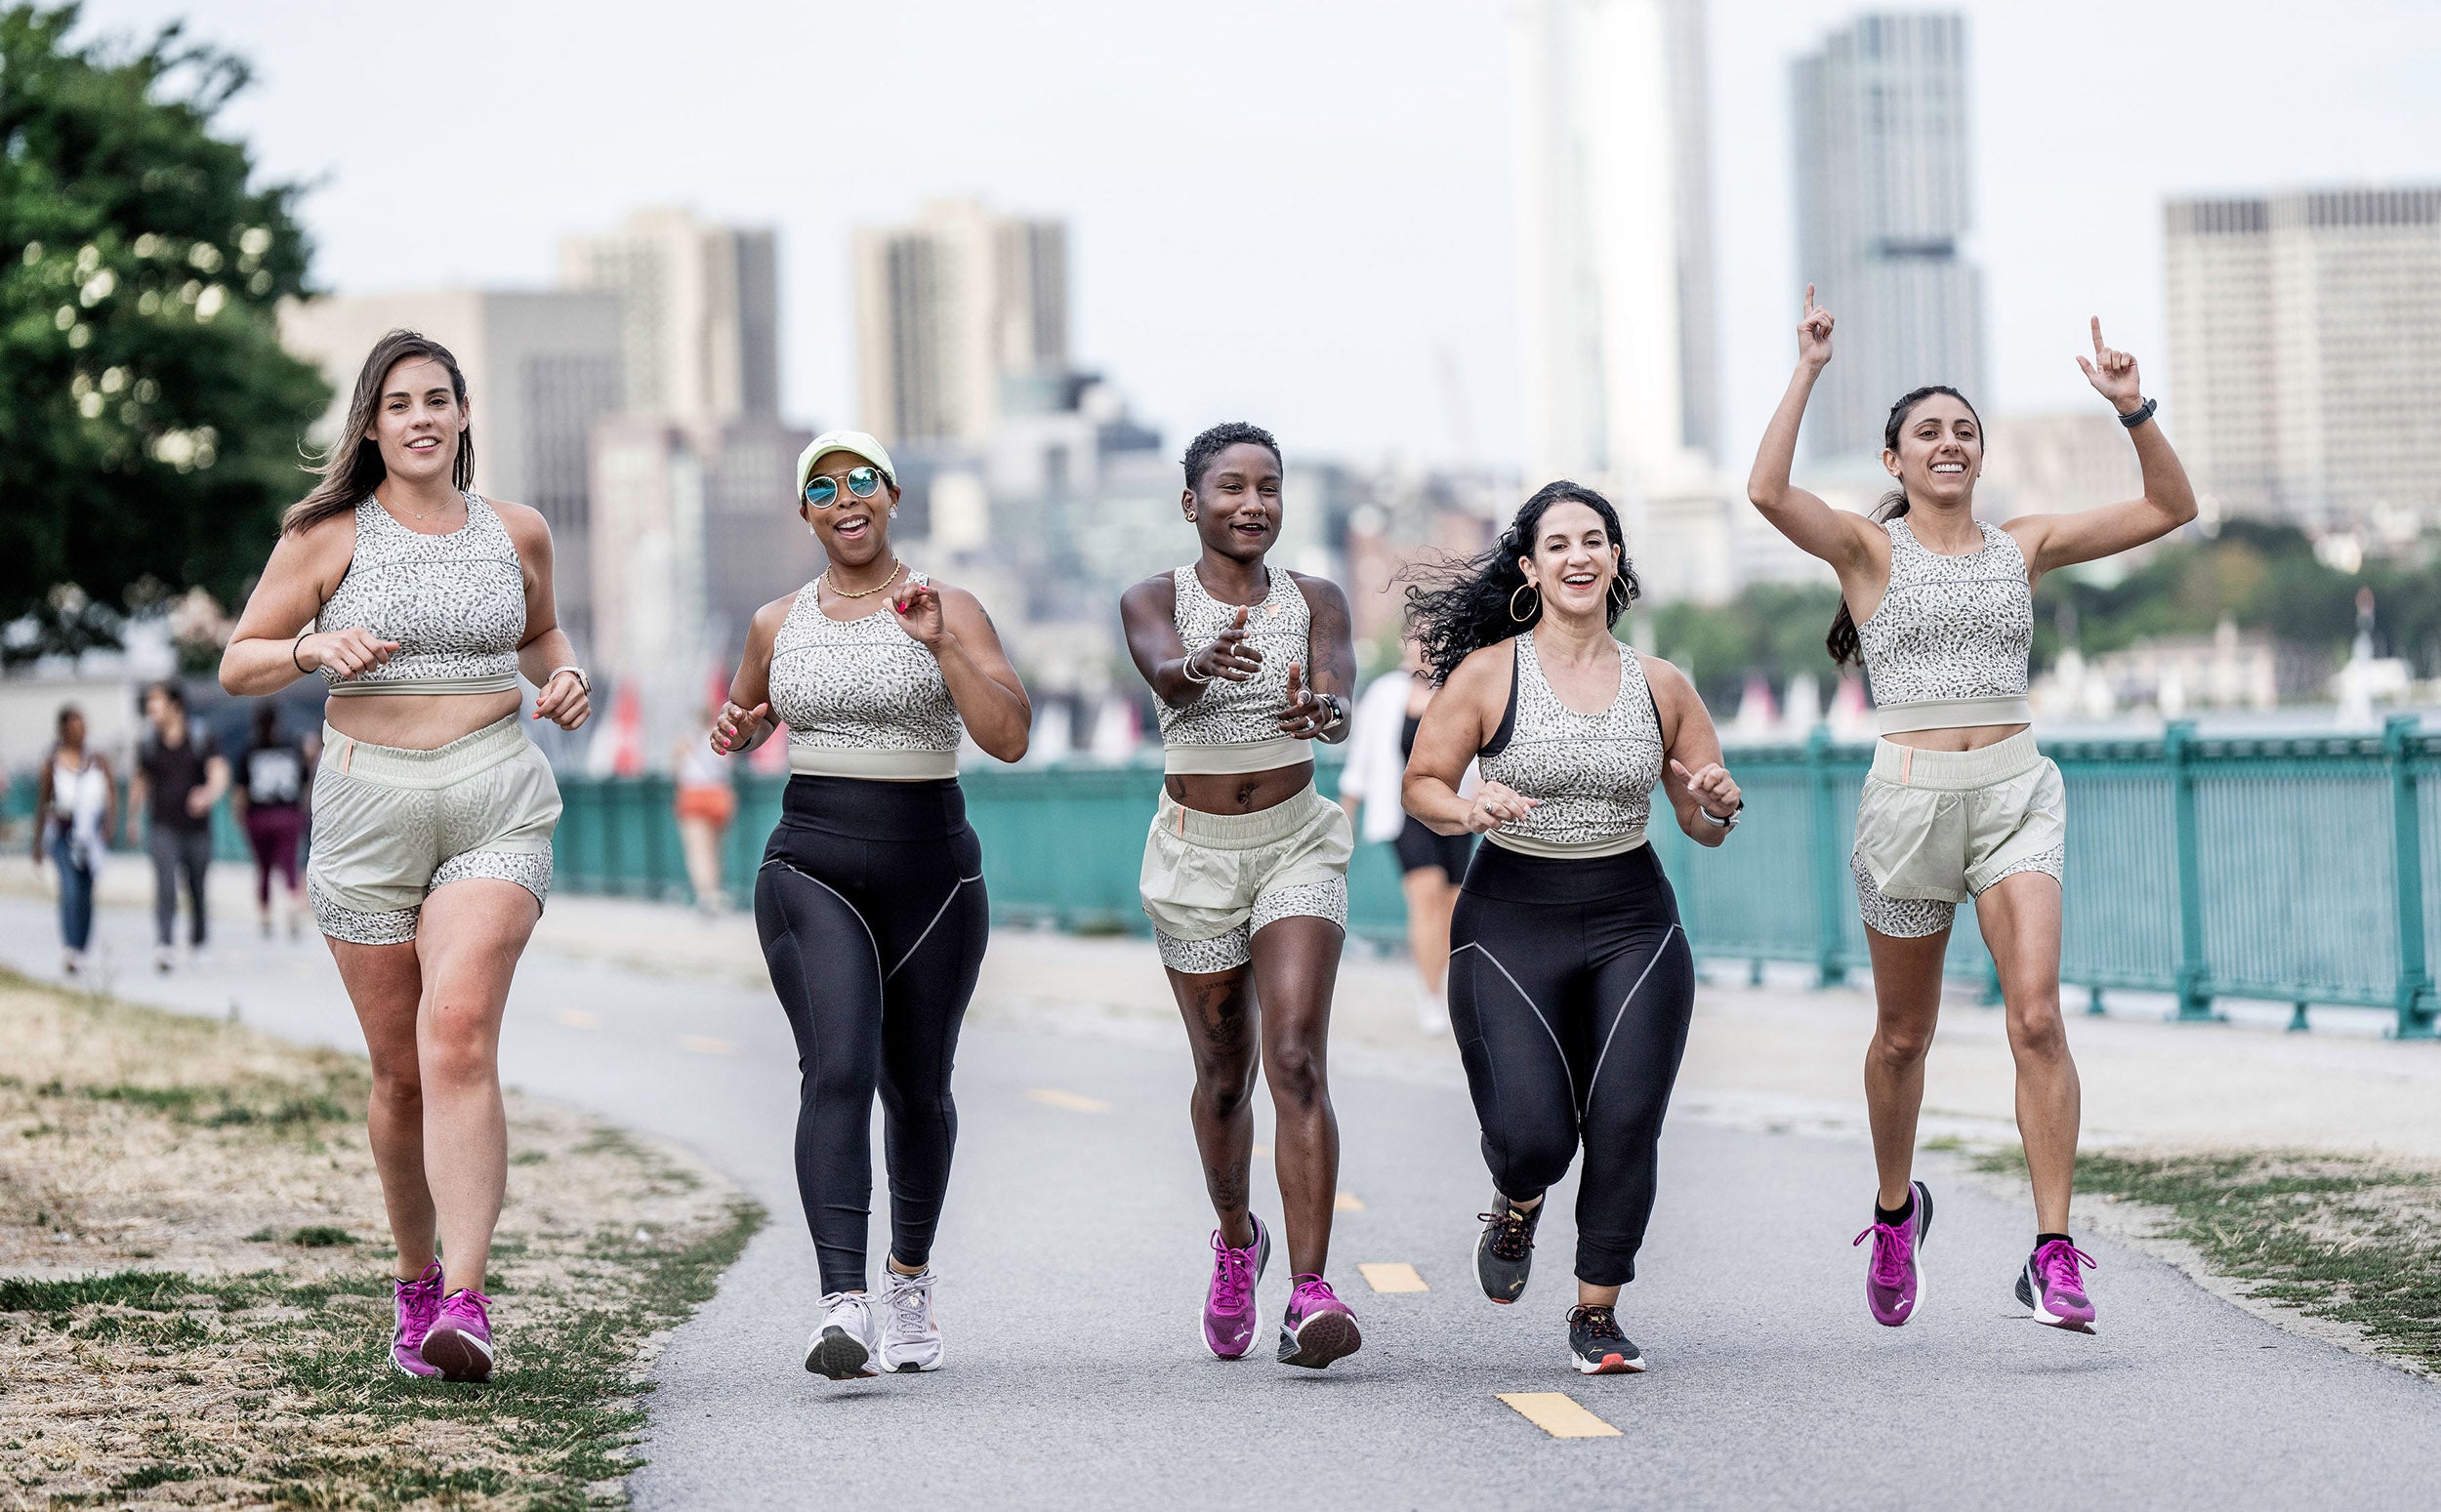 Erin Wallace, Angel Babbitt Harris, Abeo Powder, Elaine Kordis, Alia Qatarneh run the 2022 Boston 10K for Women. (Courtesy of PUMA / PUMA Running)